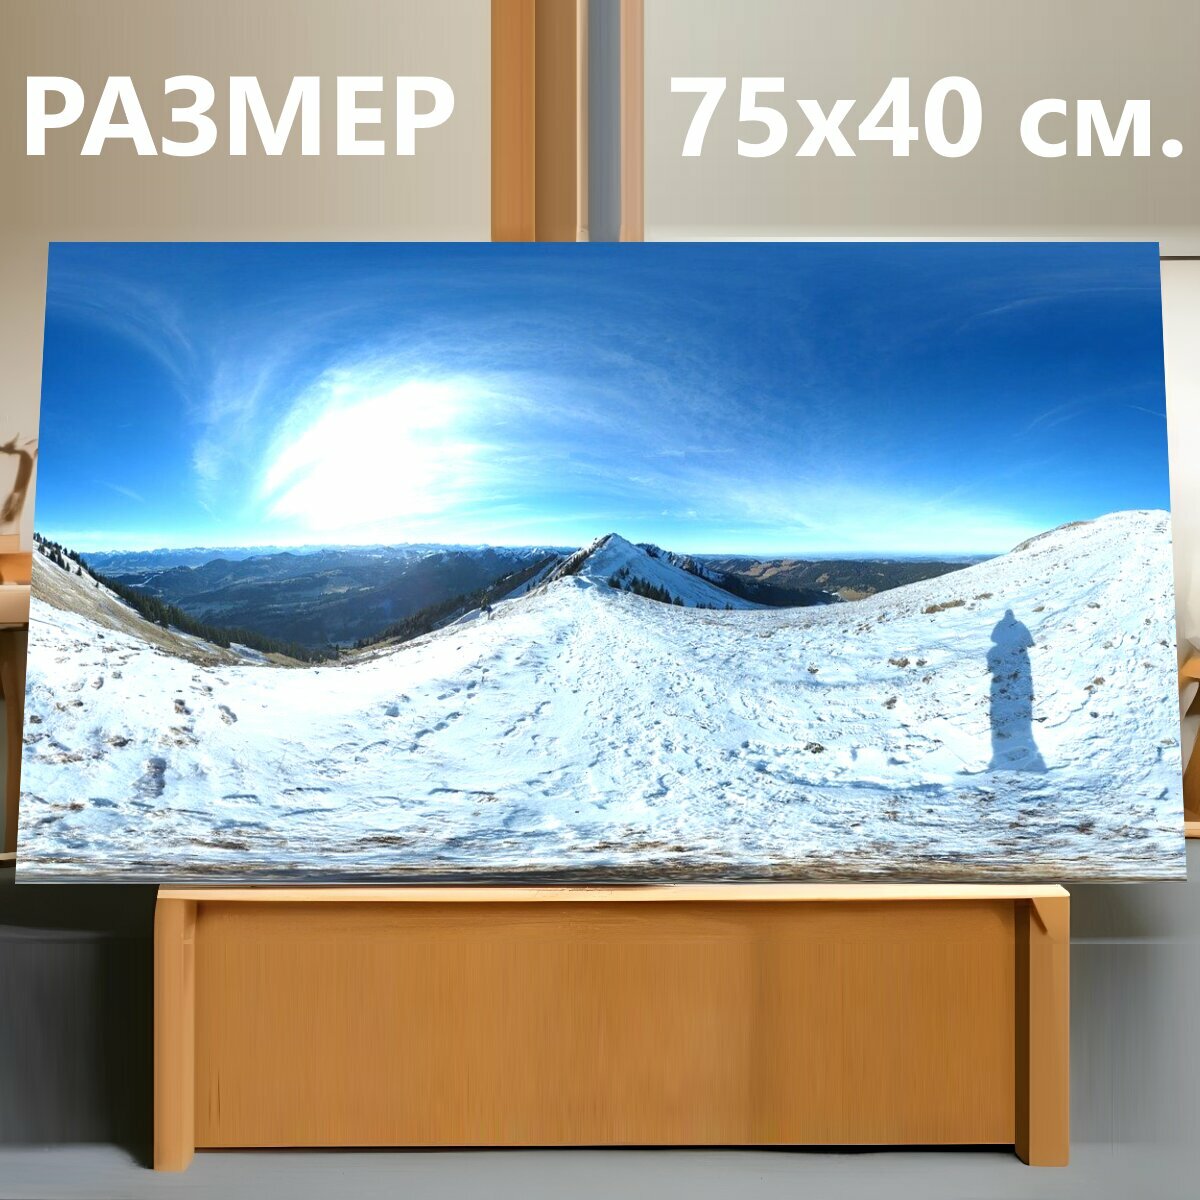 Картина на холсте "Зима, панорама, горы" на подрамнике 75х40 см. для интерьера